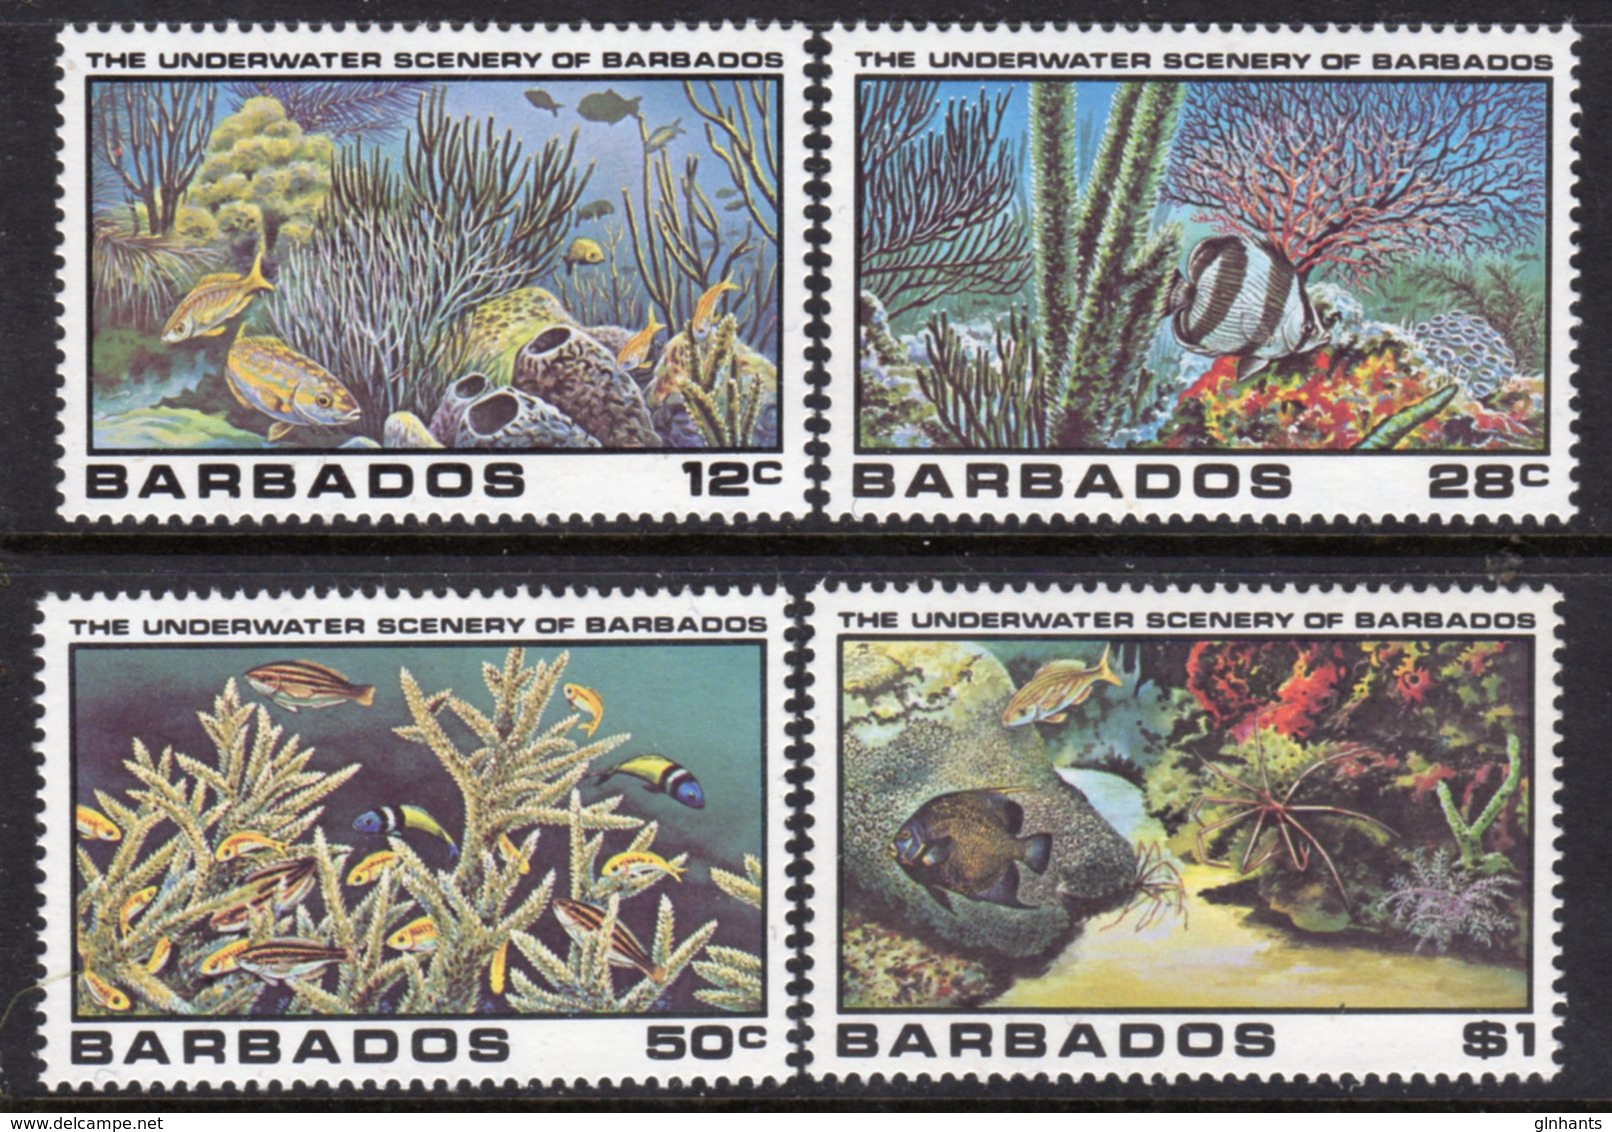 BARBADOS - 1980 UNDERWATER SCENERY SET (4V) FINE MNH ** SG 660-663 - Barbados (1966-...)